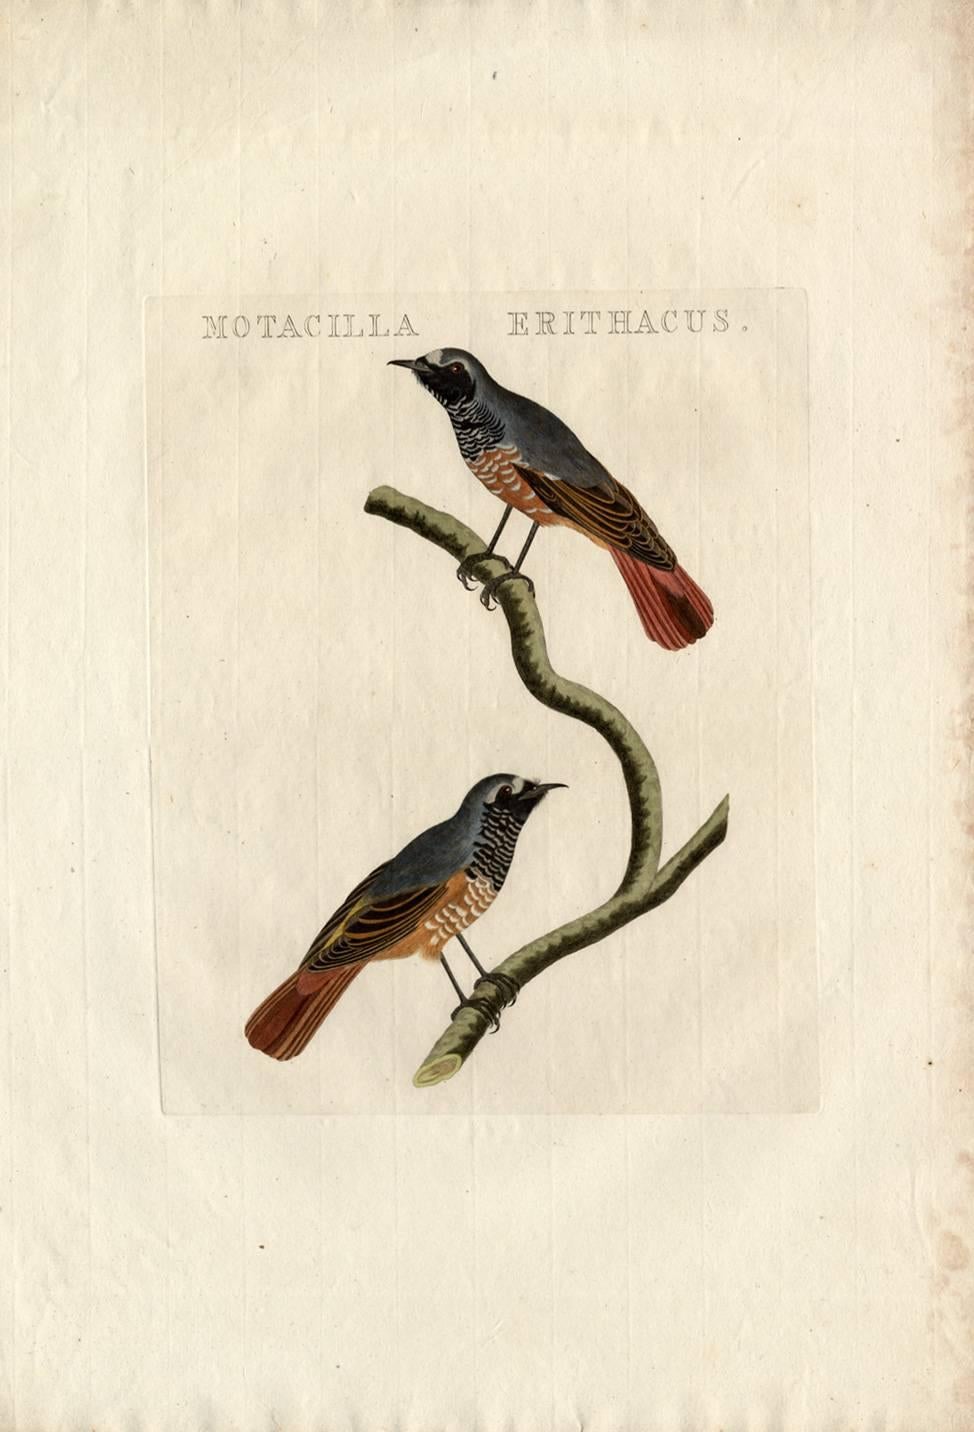 Cornelis Nozeman and Jan Christiaan Sepp Animal Print - Species: Motacilla erithacus or Phoenicurus phoenicurus. The Common Redstart.